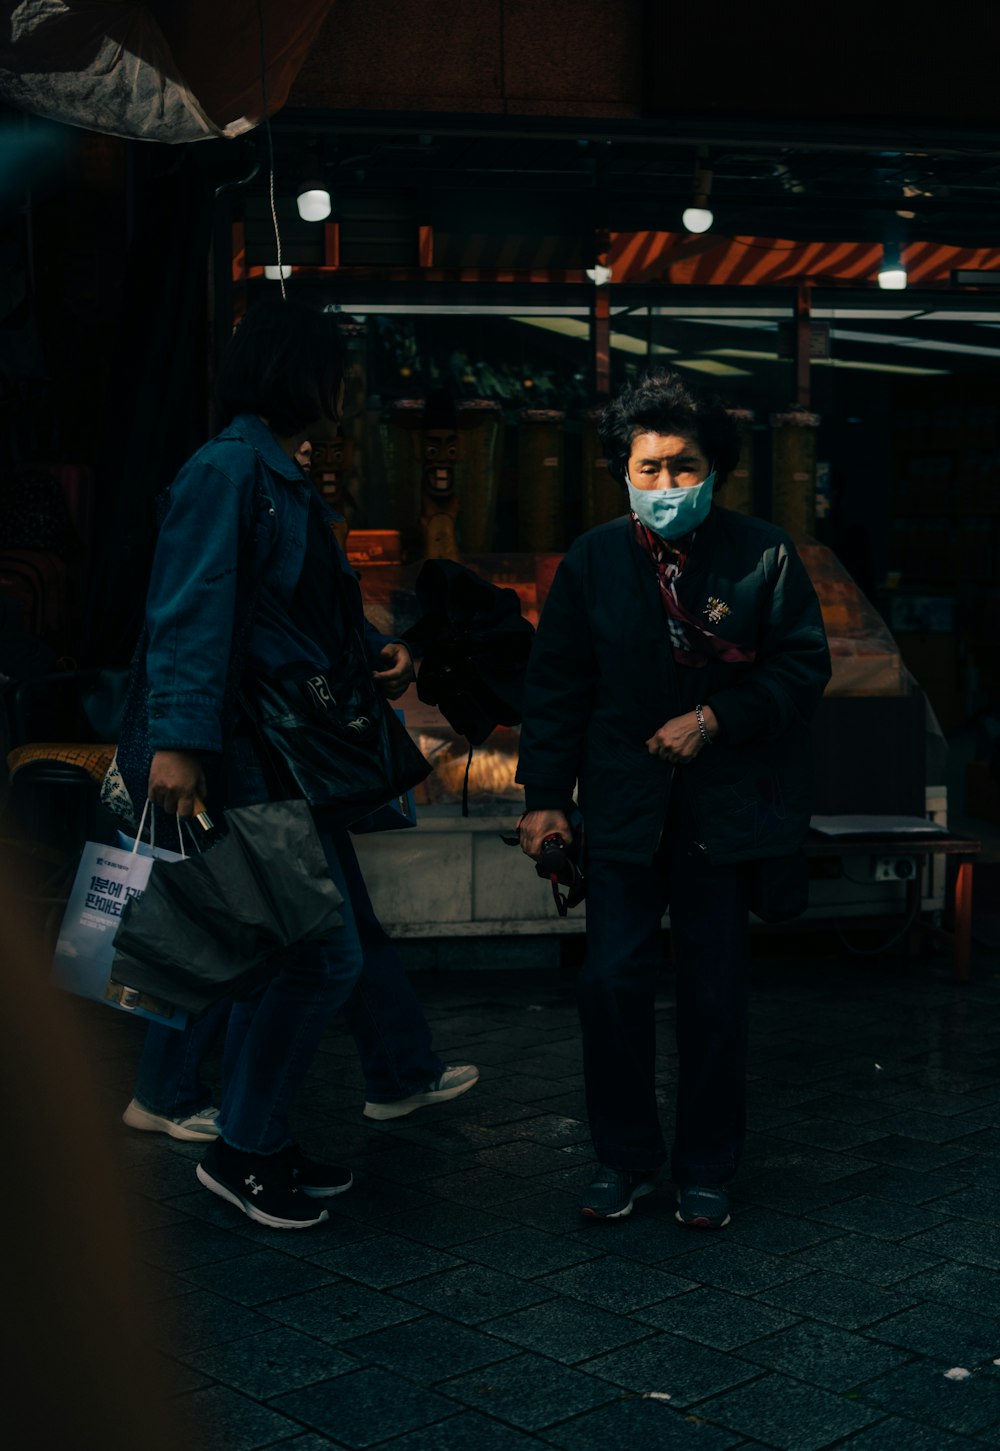 a man wearing a face mask standing on a sidewalk